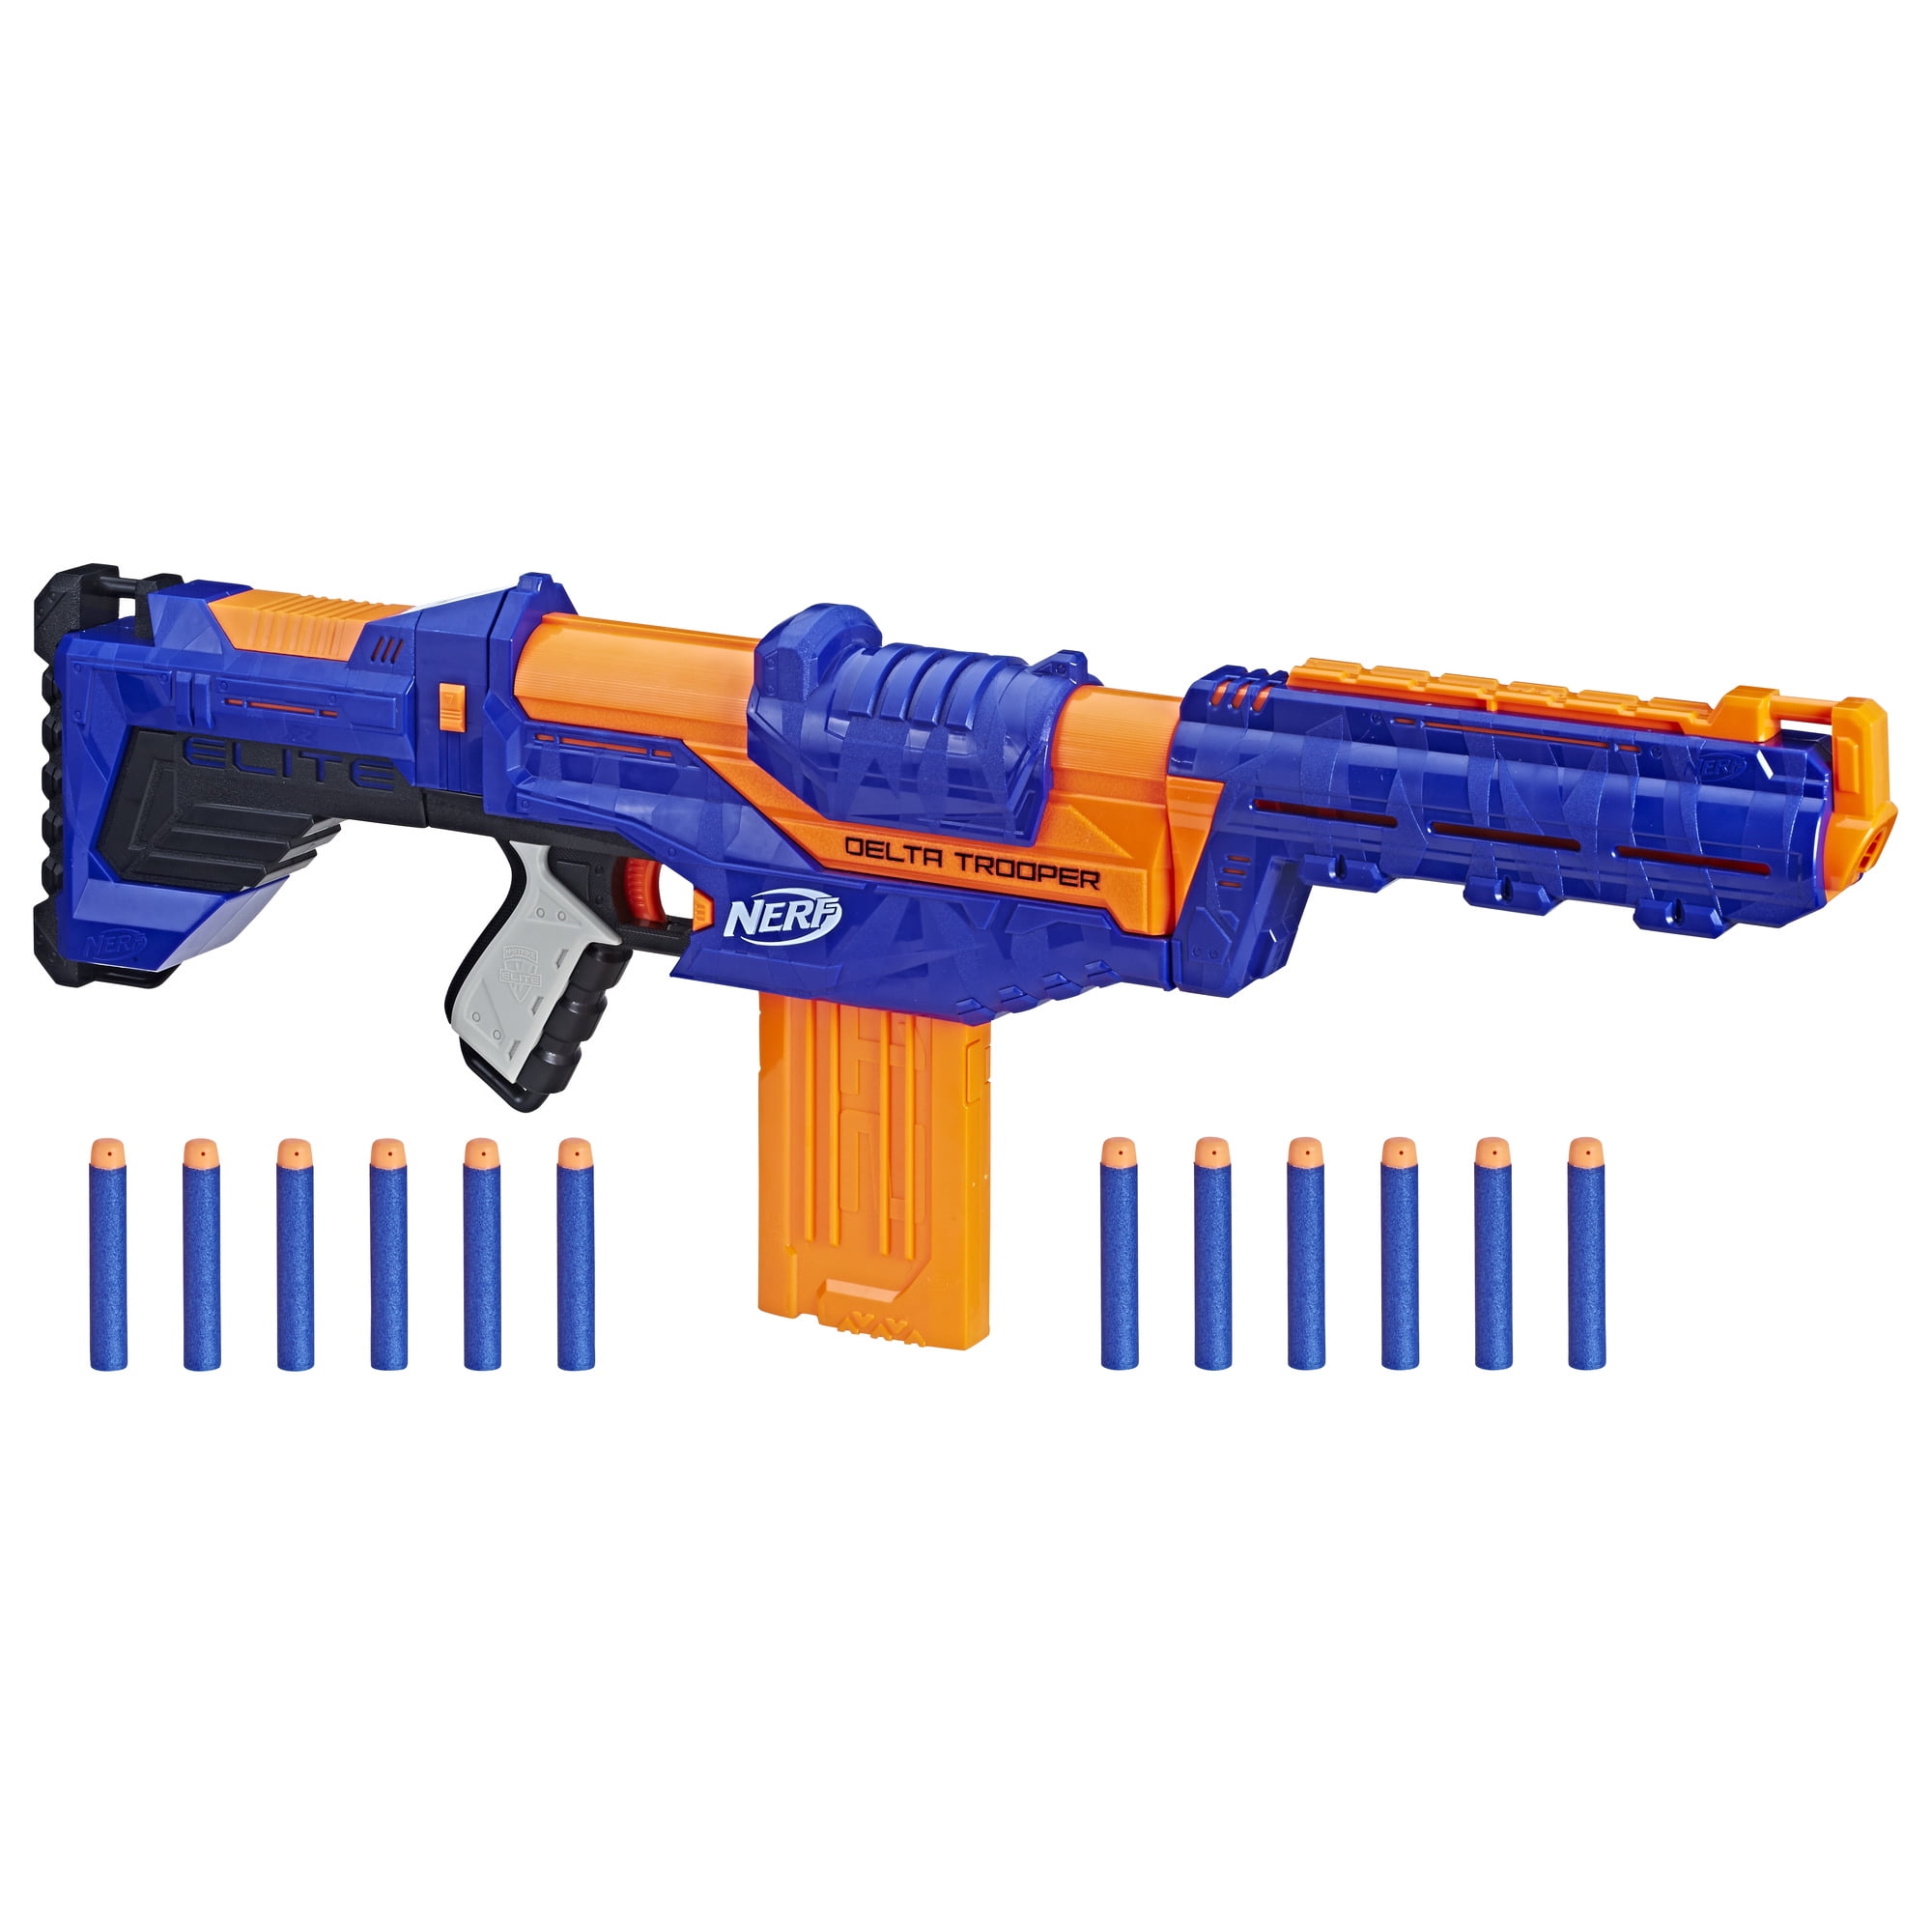 Nerf N-strike Mega Accustrike Thunderhawk Longest Darts Blaster Kids Toy Gun new 